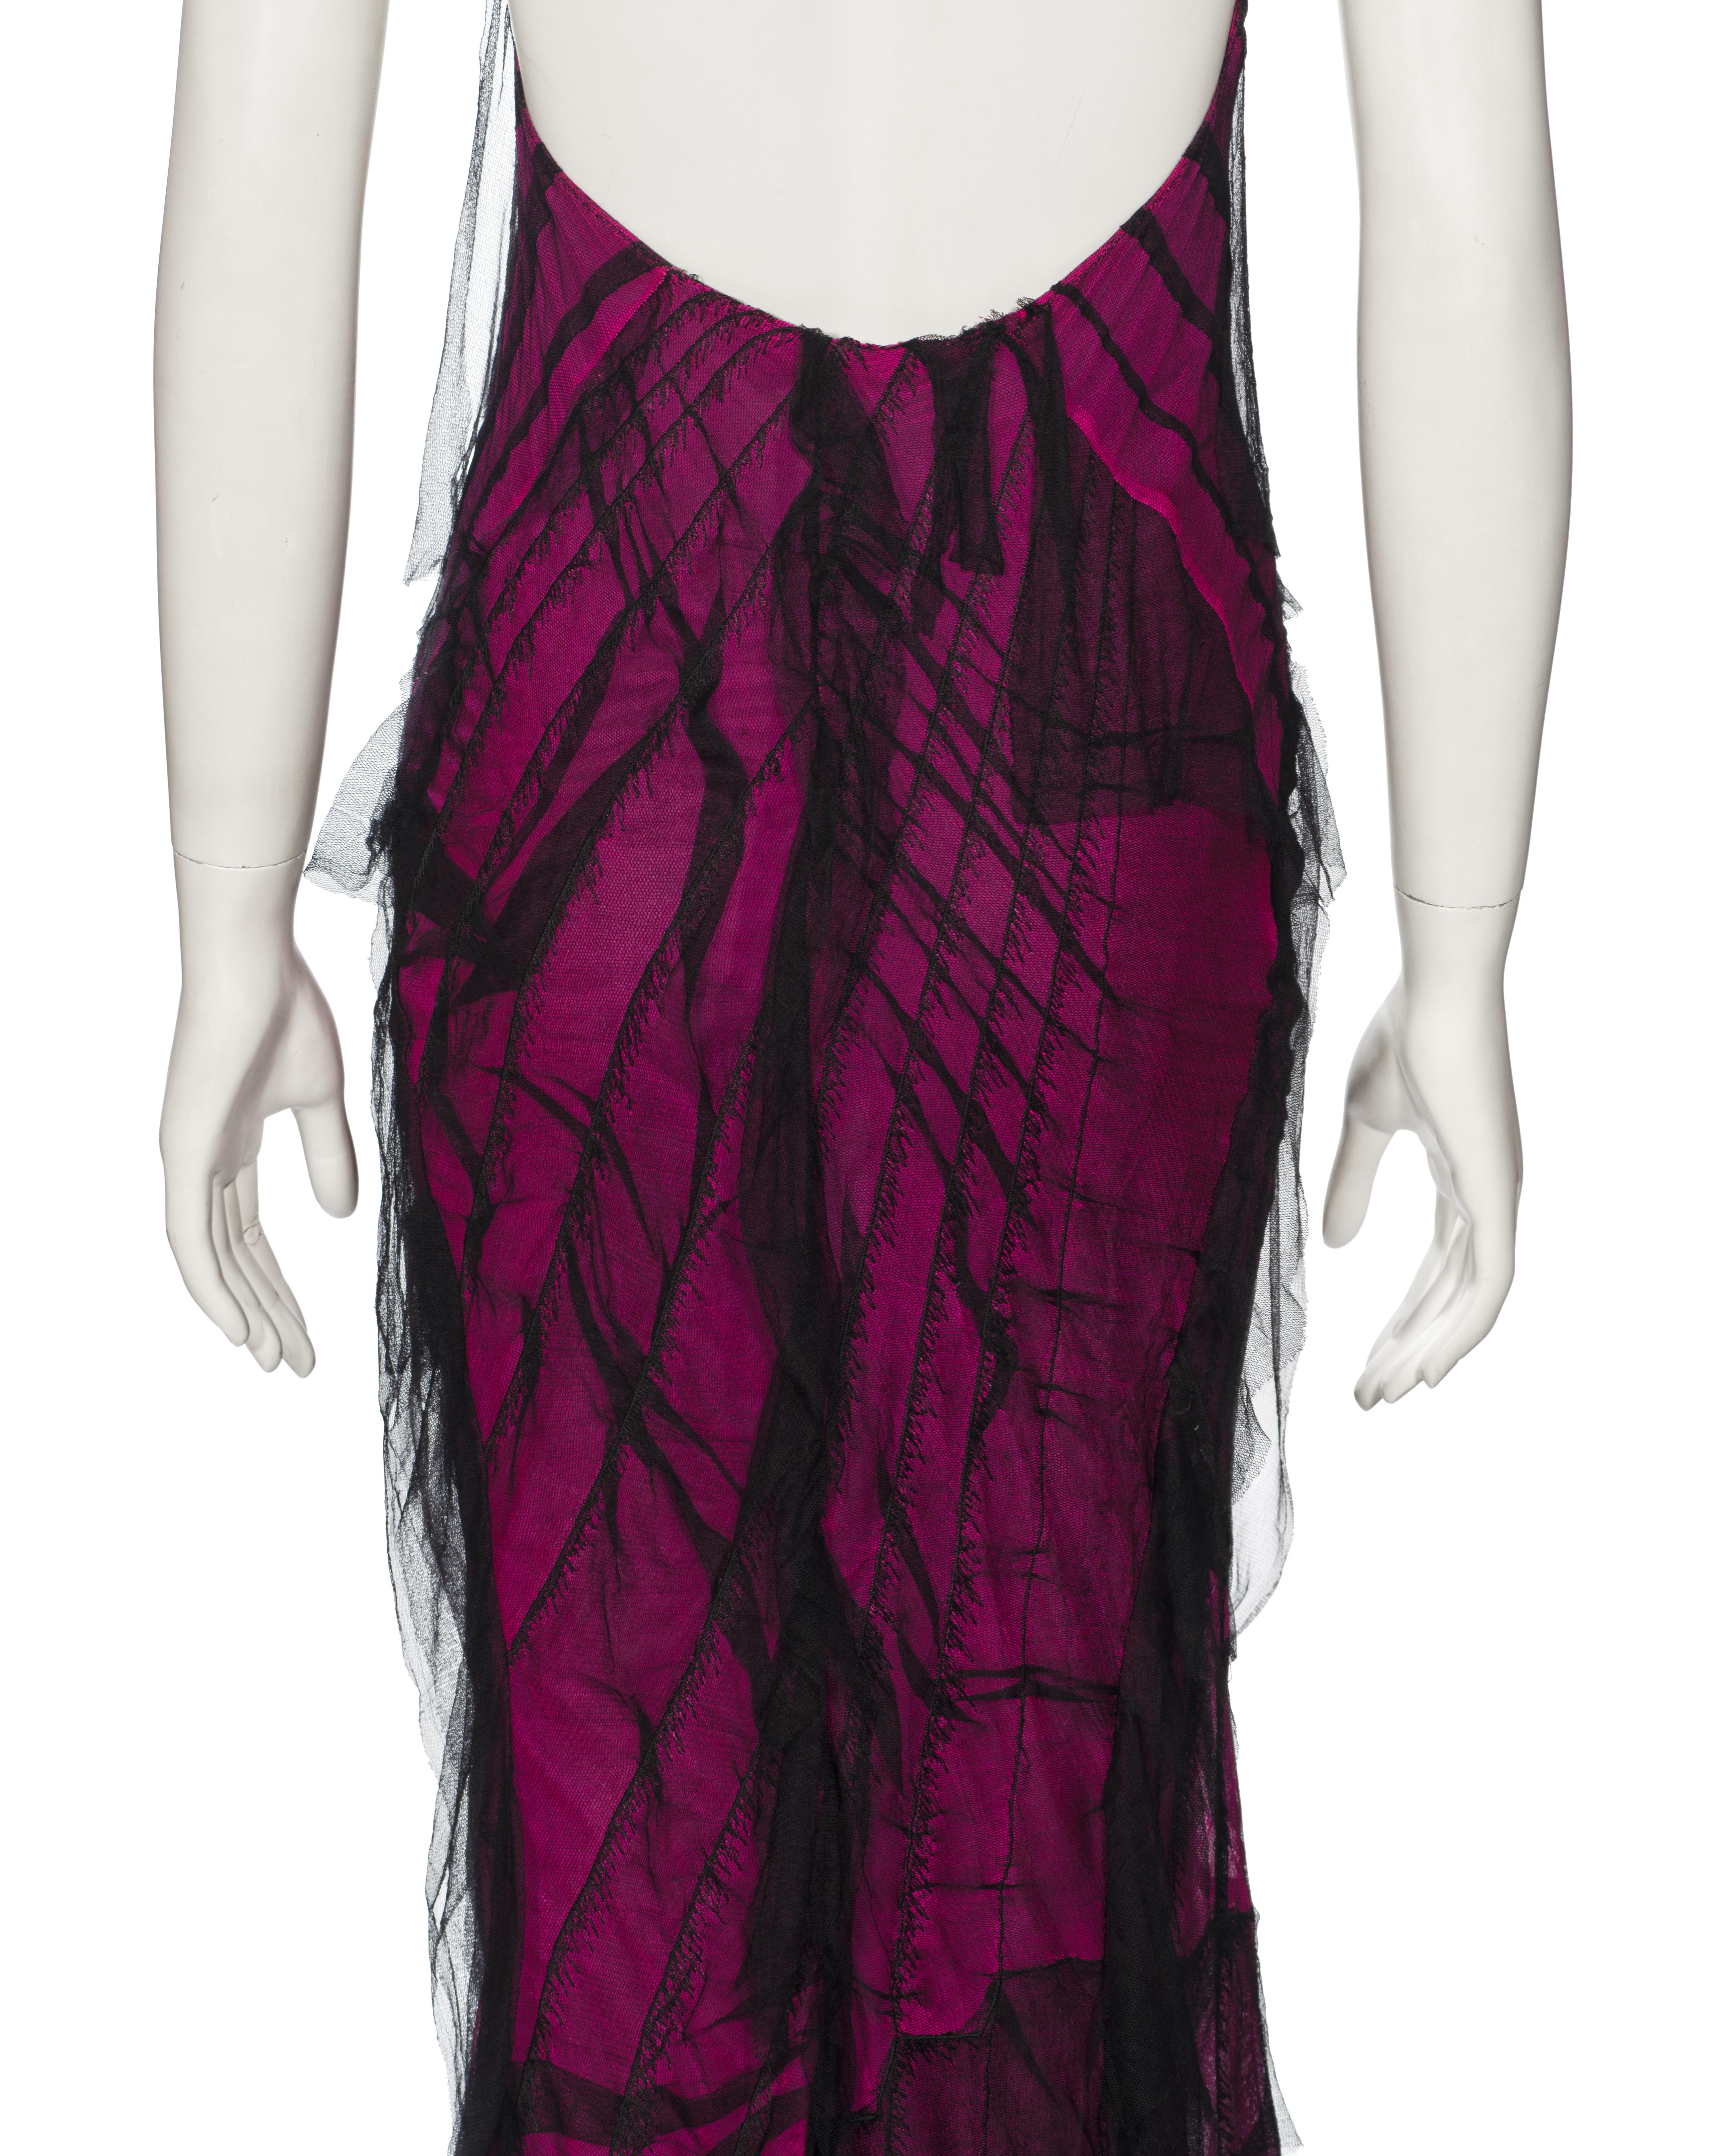 Roberto Cavalli Distressed Pink Silk Mesh Evening Halter Neck Dress, ss 2001 For Sale 5